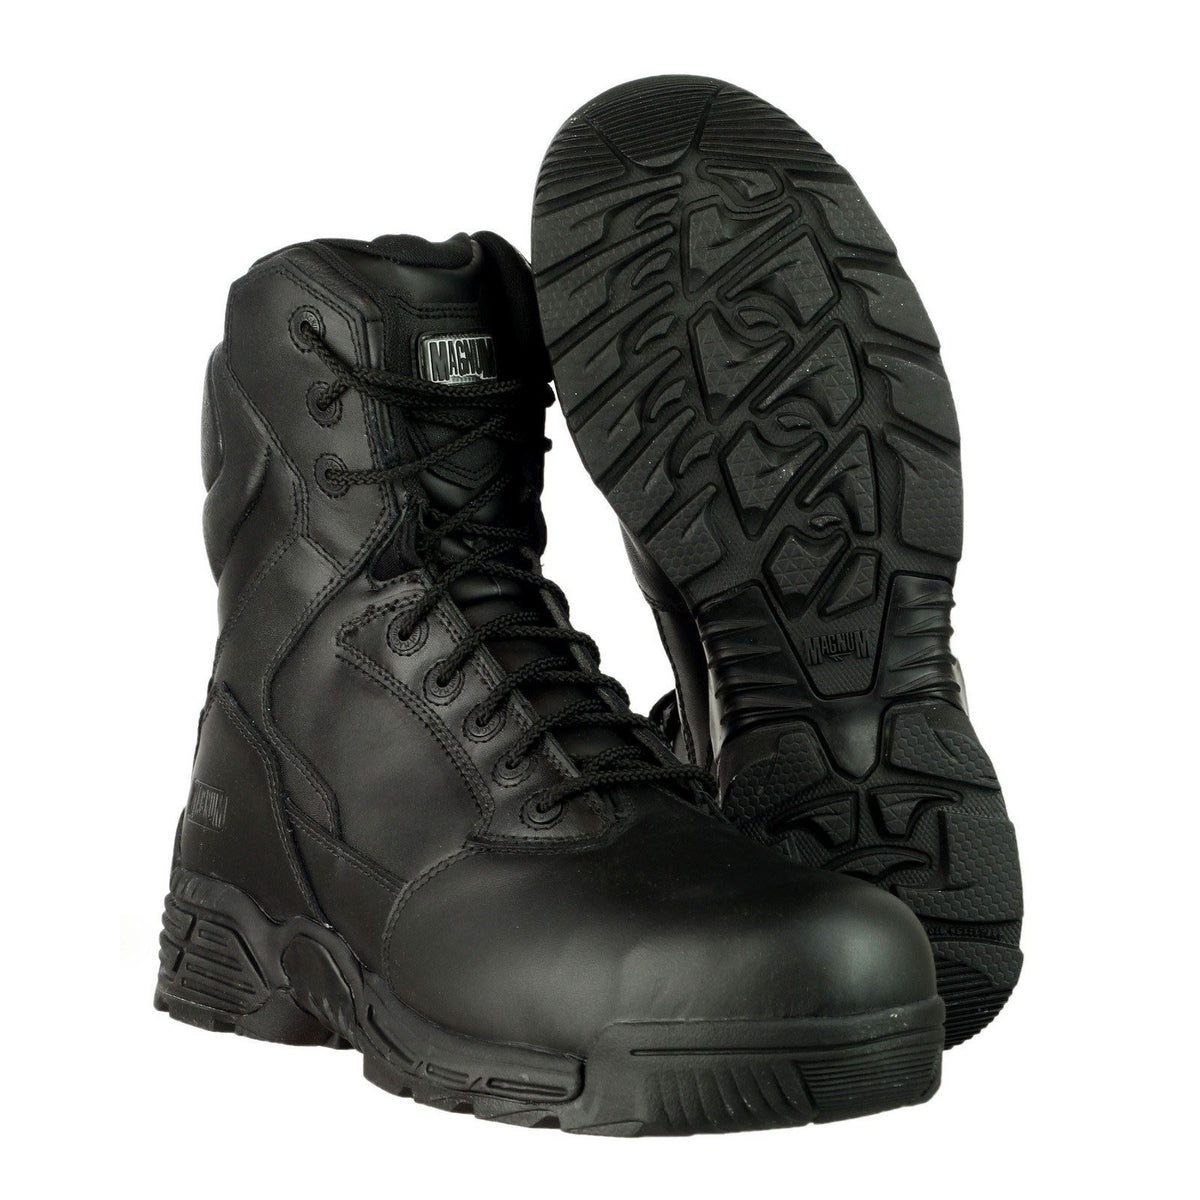 Magnum Stealth Force 8.0 Uniform Safety Boots